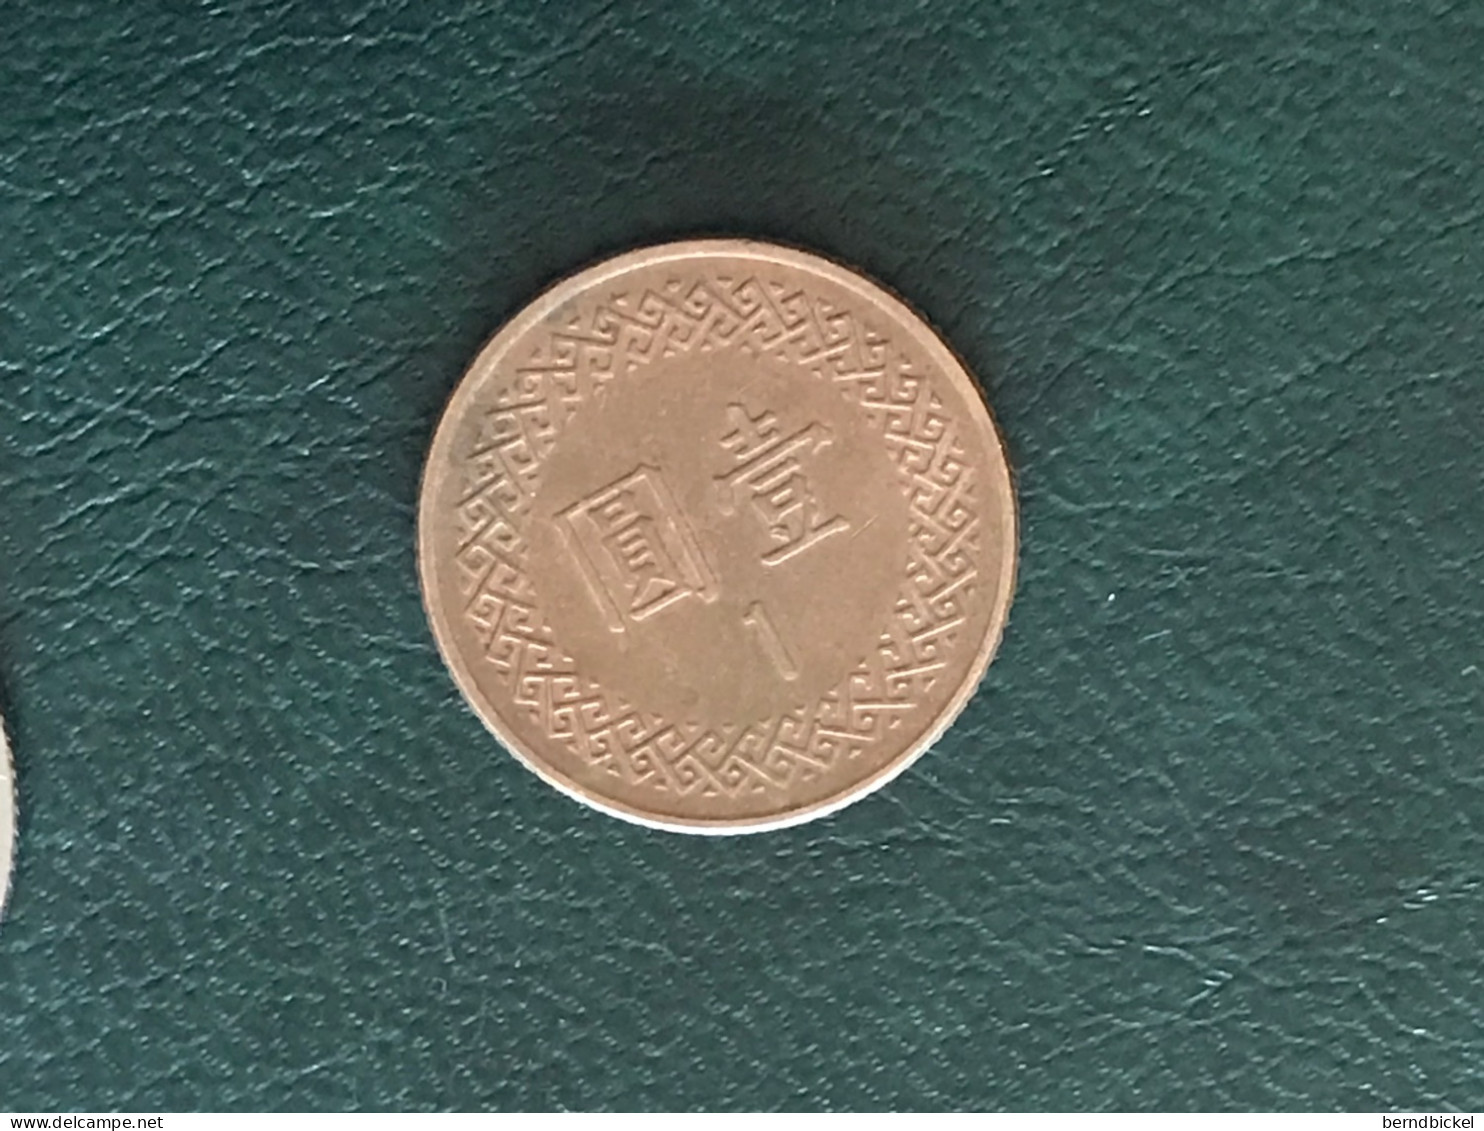 Münze Münzen Umlaufmünze Taiwan 1 Dollar 1987 - Taiwán